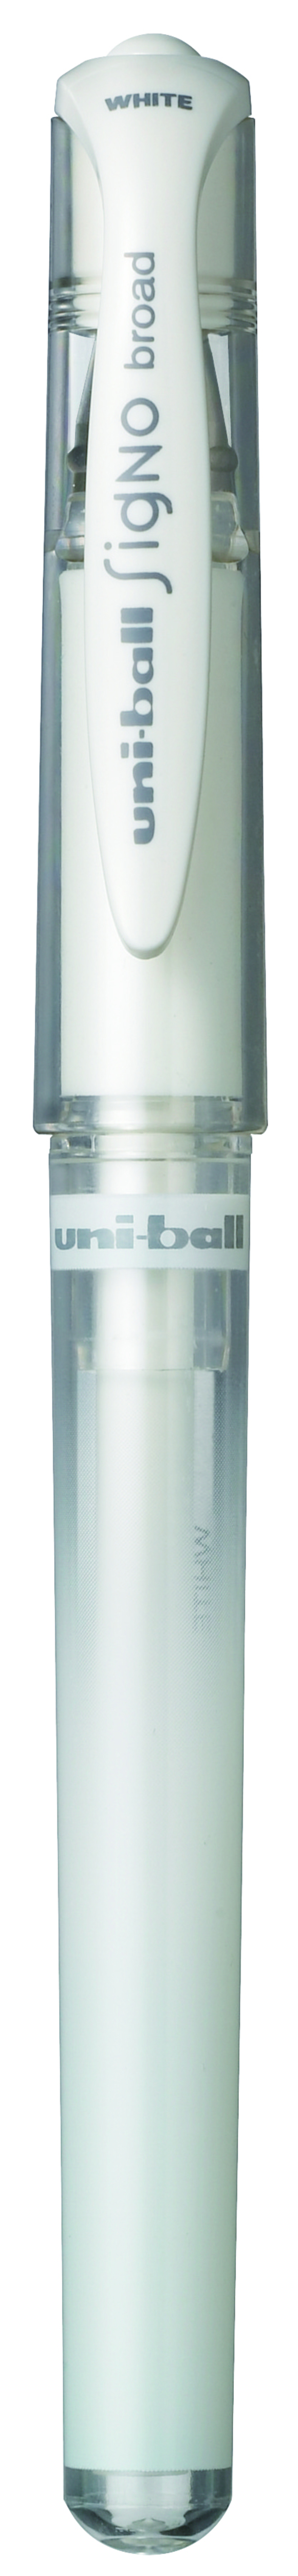 Uniball Signo Broad Rollerball 1.0mm White